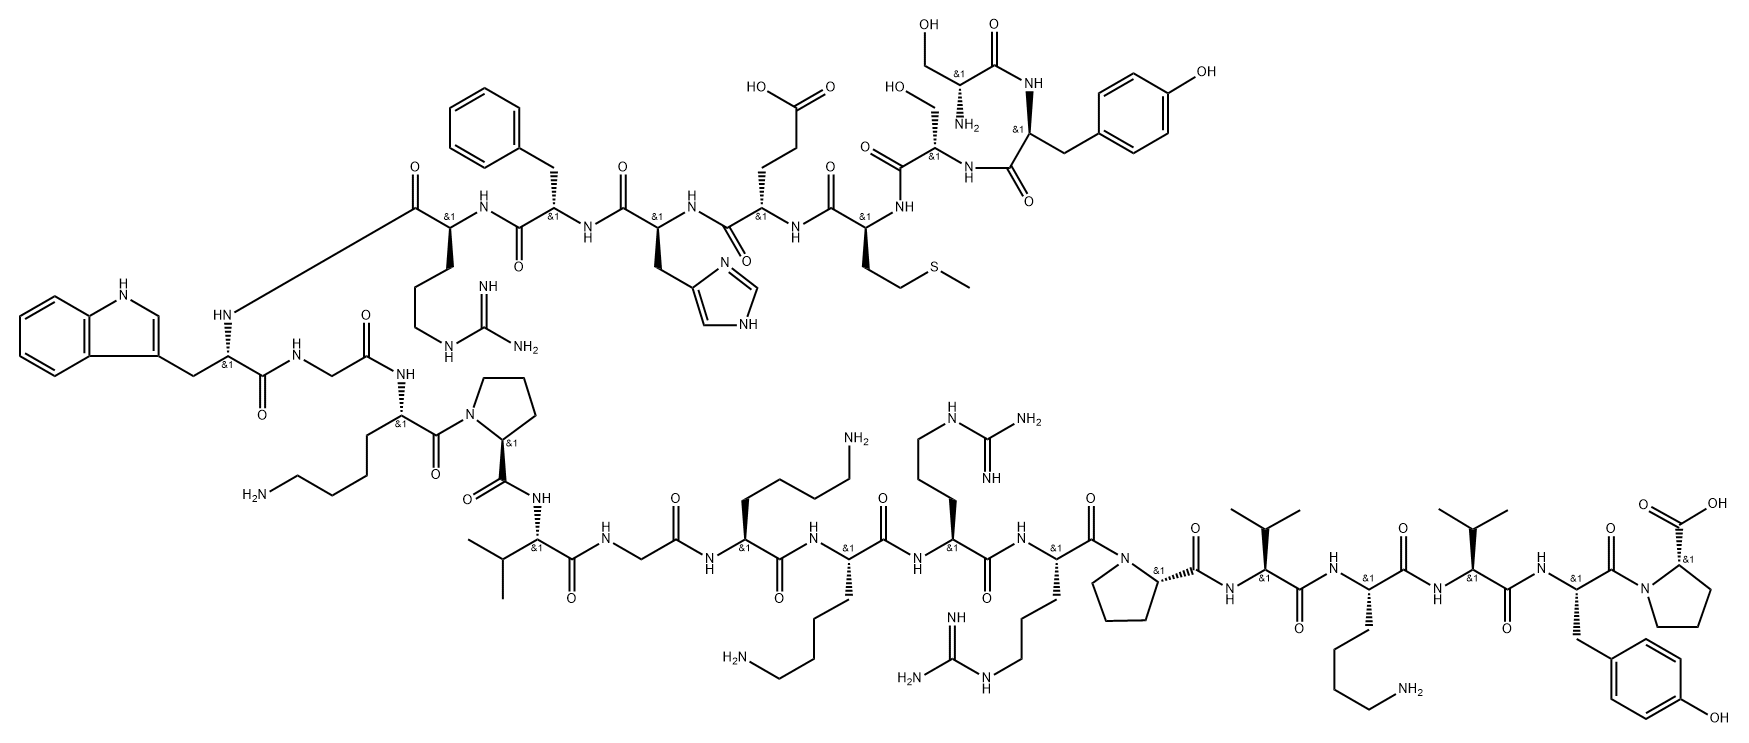 (D-Ser1)-ACTH (1-24) (human, bovine, rat) Structure